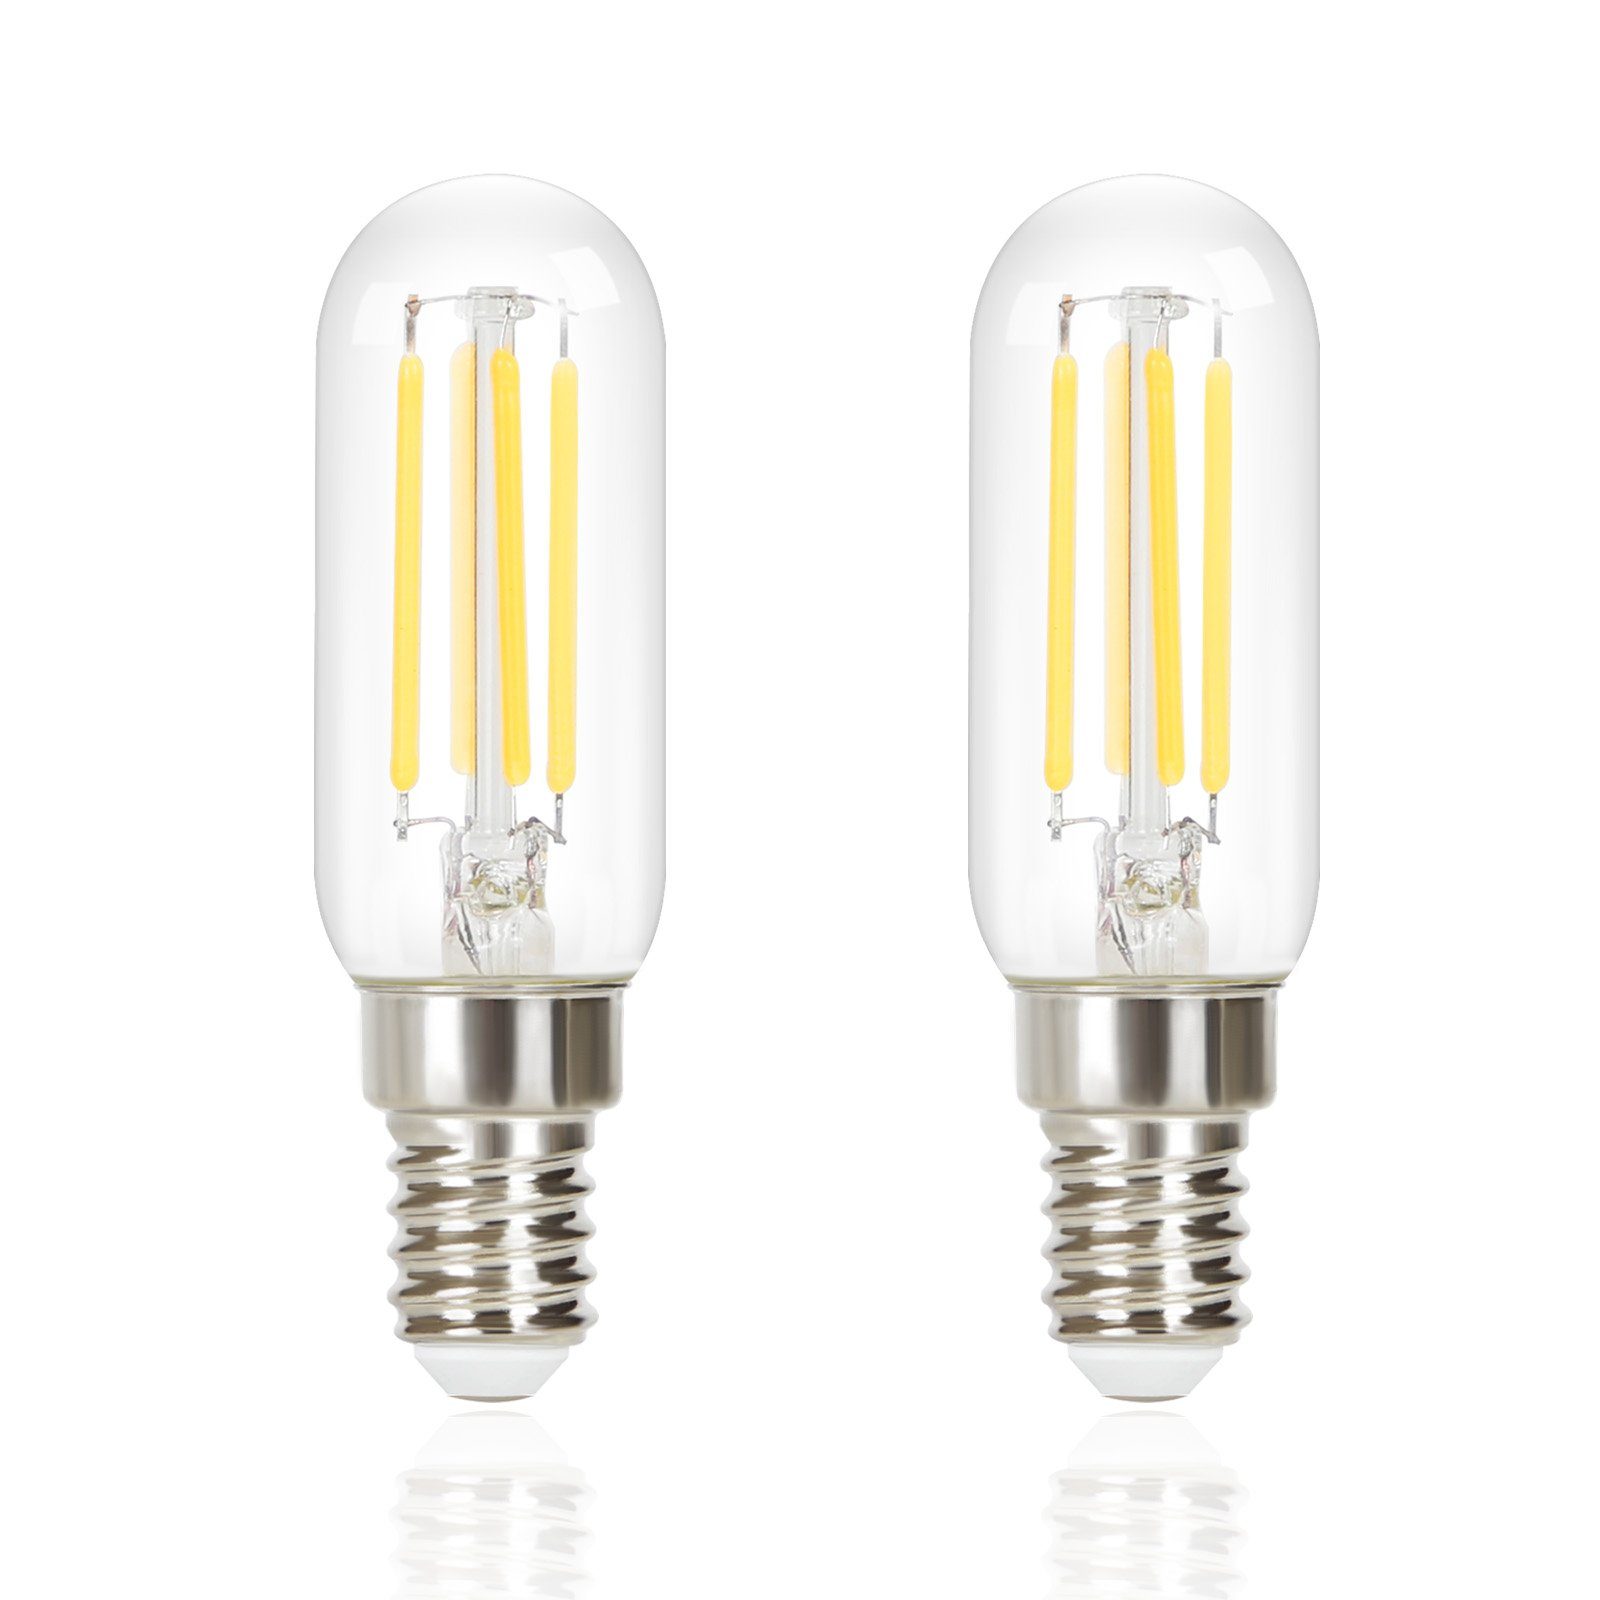 ZMH LED Glühbirnen Vintage Lampe Birnen 4W Energiesparlampe  LED-Leuchtmittel, E27, 2 St., 6000k, nicht dimmbar